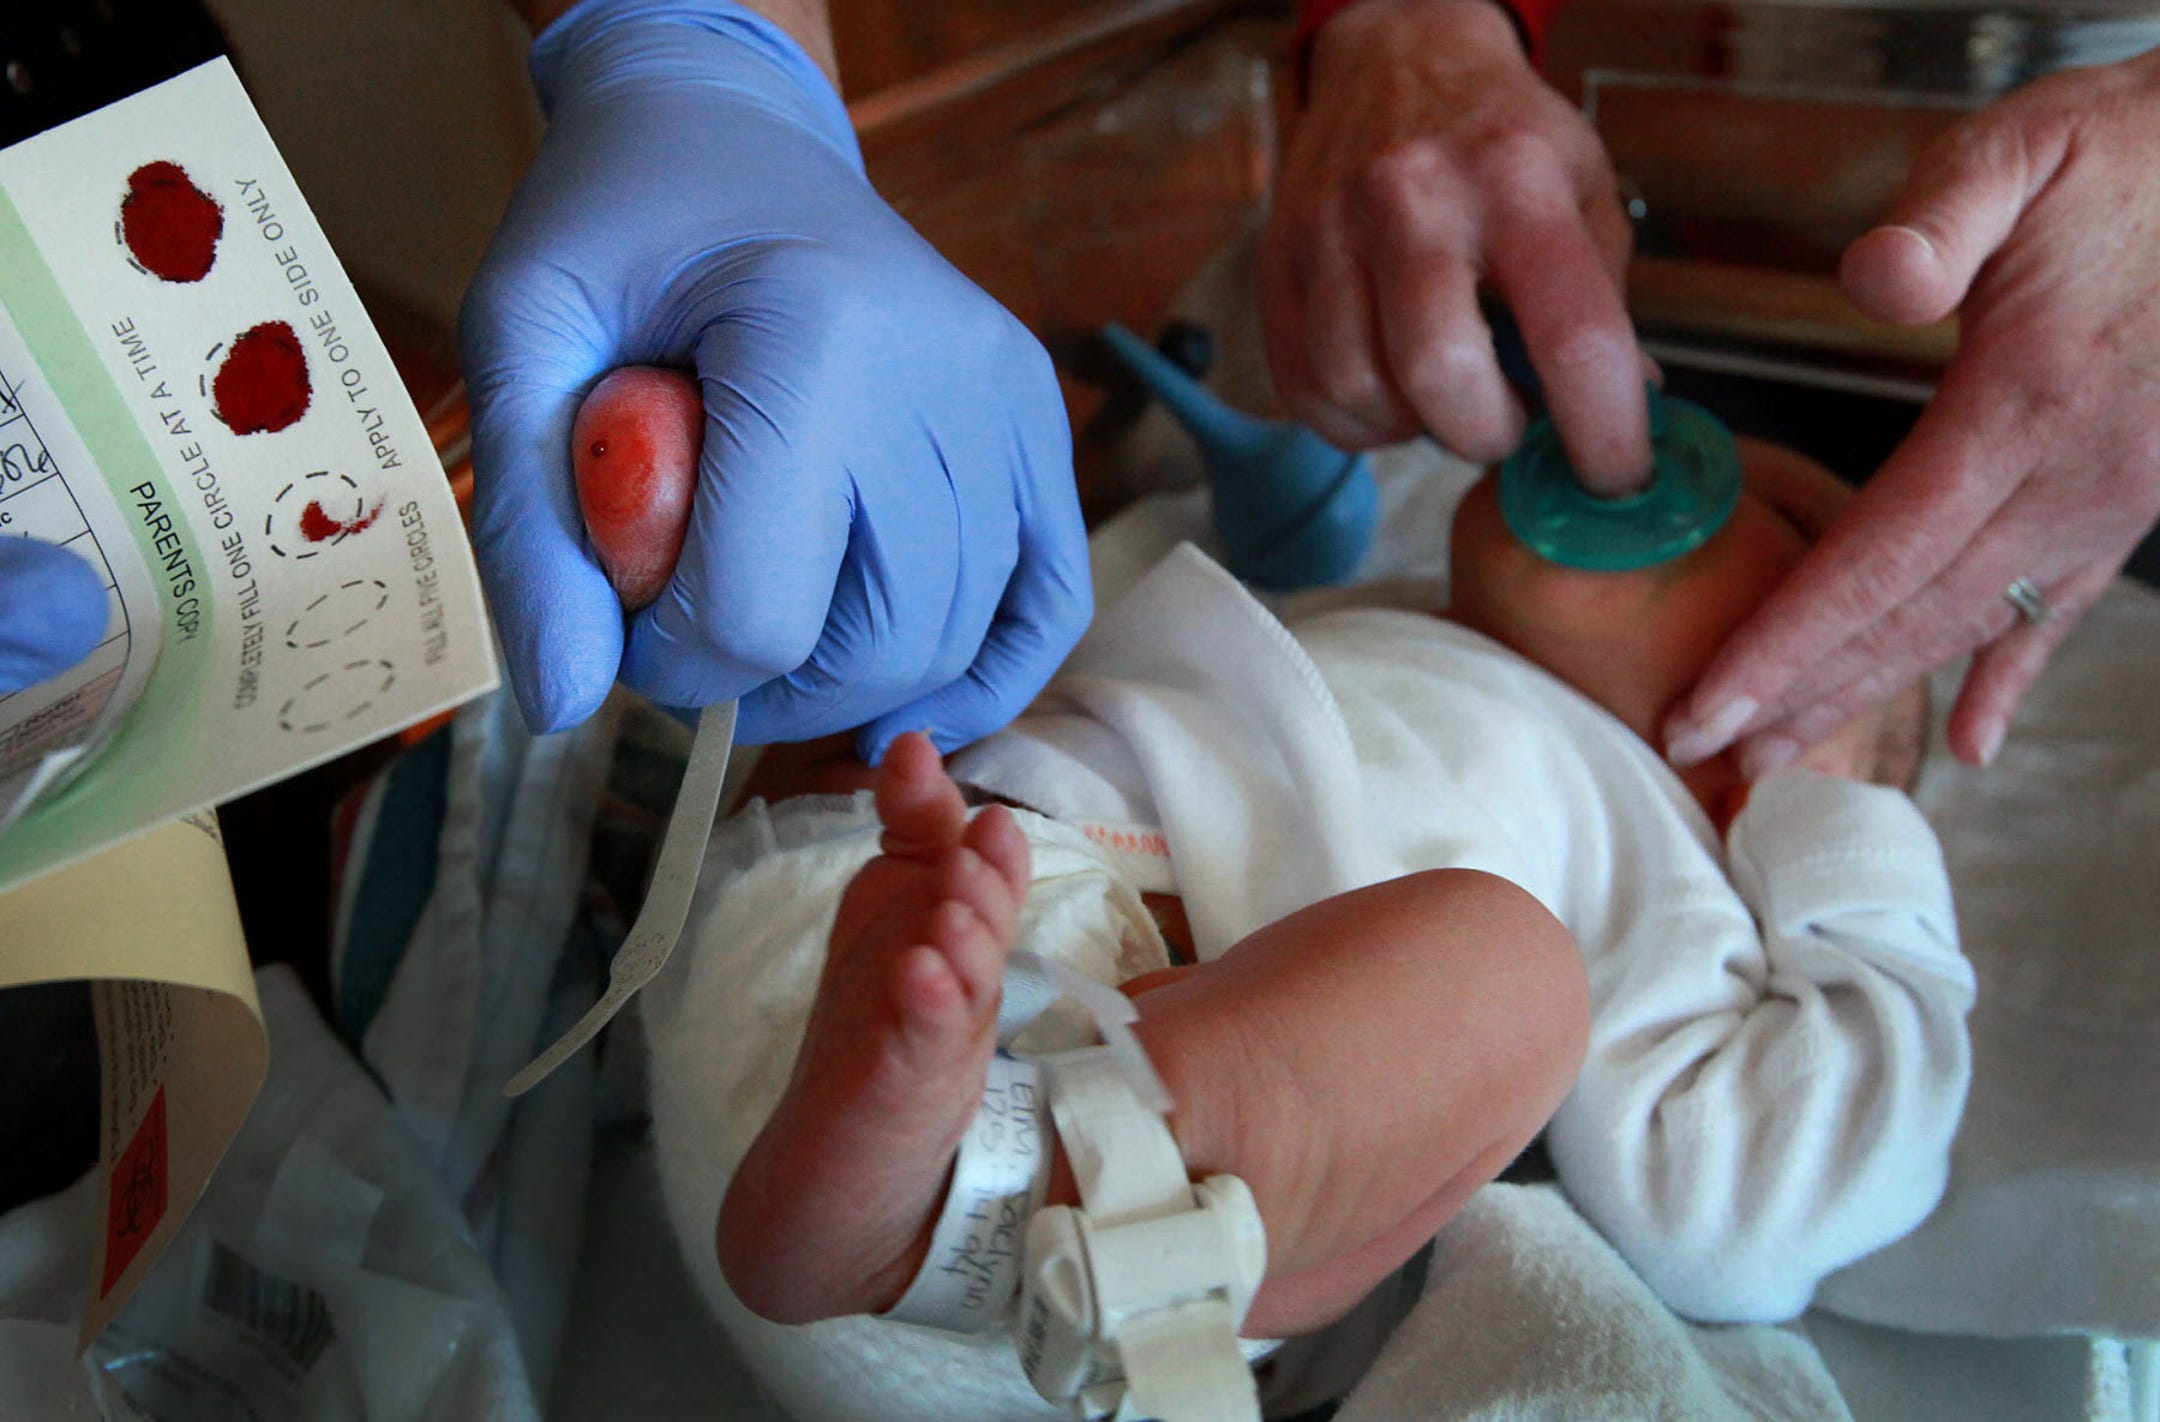 Baby's First Test, Newborn Screening